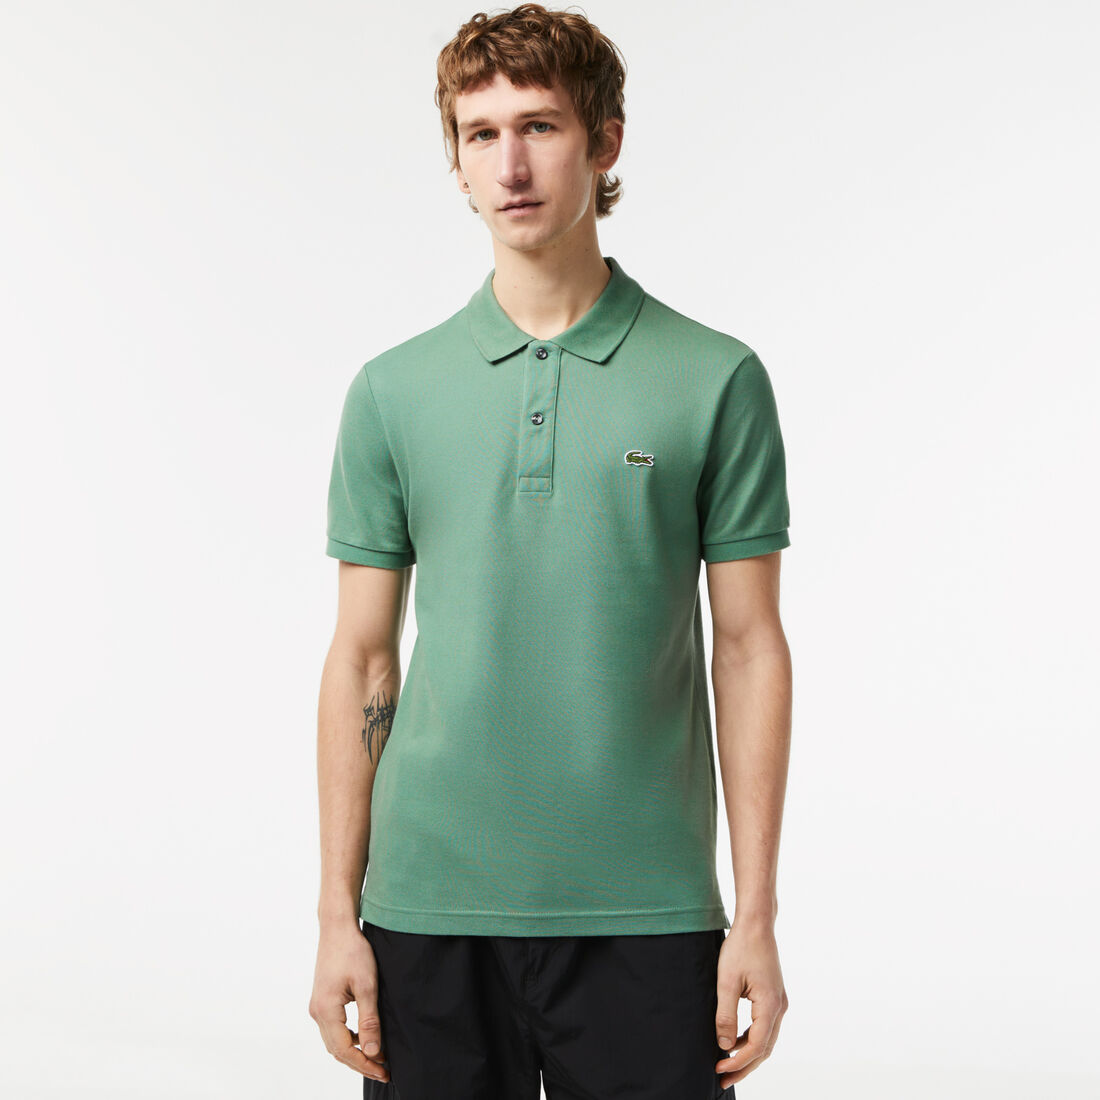 Lacoste Slim Fit In Petit Piqué Polo Shirts Herren Khaki Grün | CPAV-47809